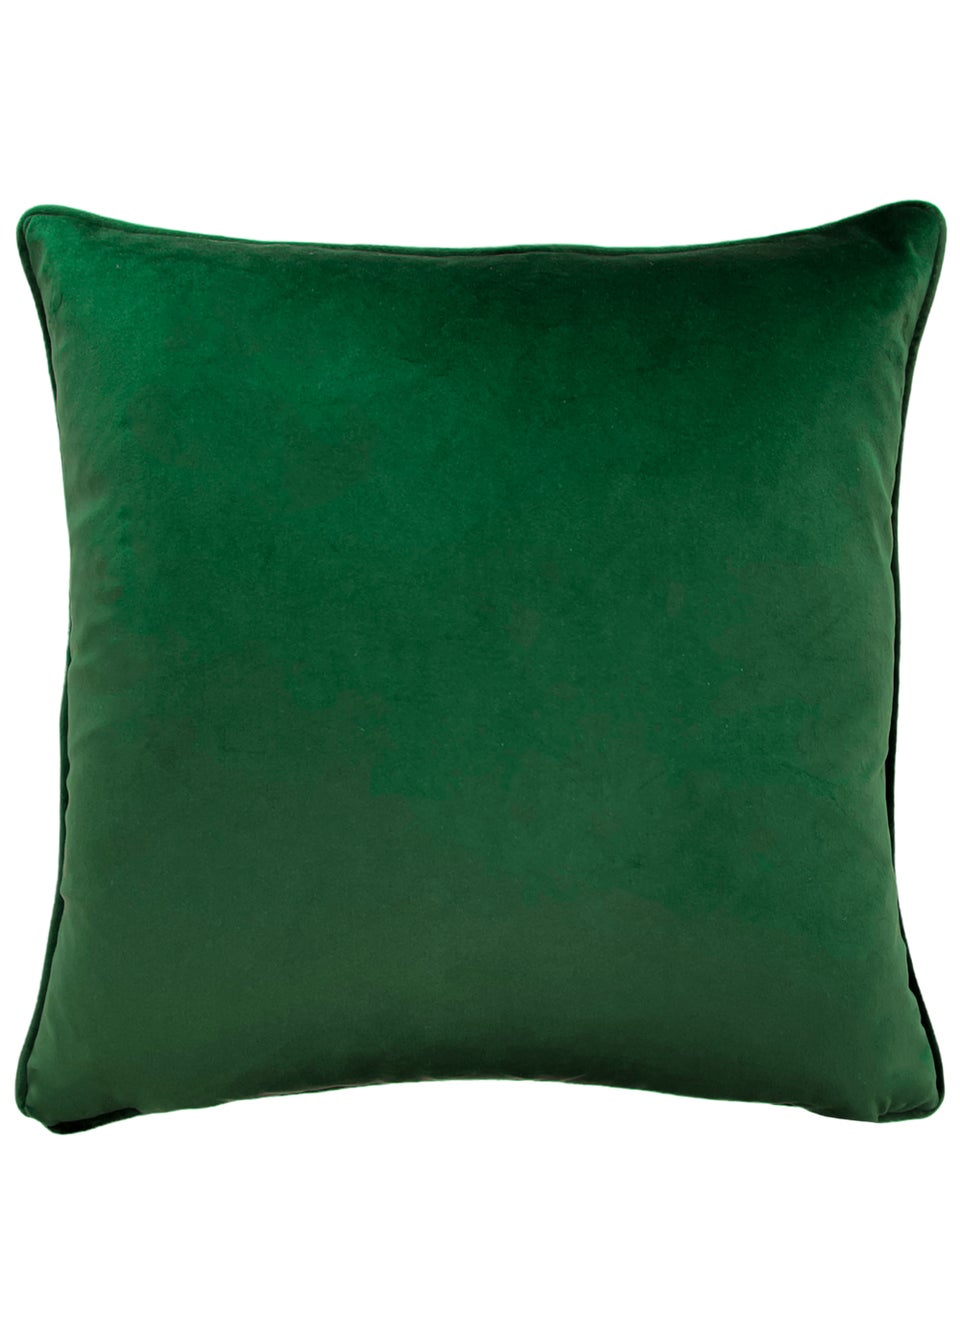 Evans Lichfield Festive Robin Repeat Filled Cushion (43cm x 43cm x 8cm)